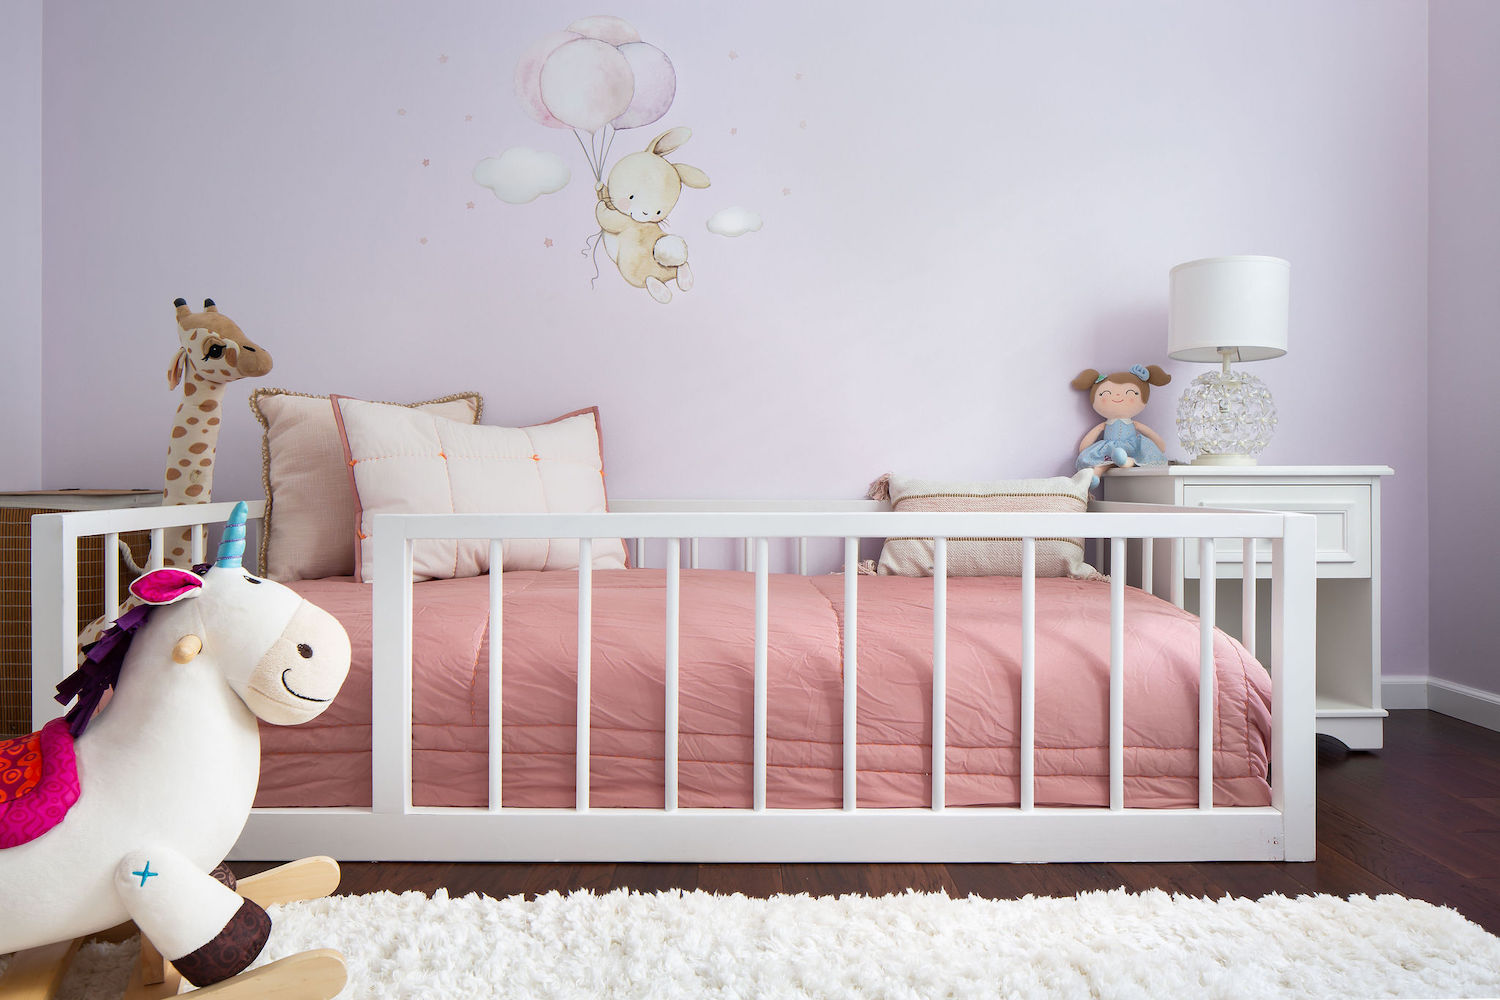 girls-bedroom-bed-rail-purple-walls